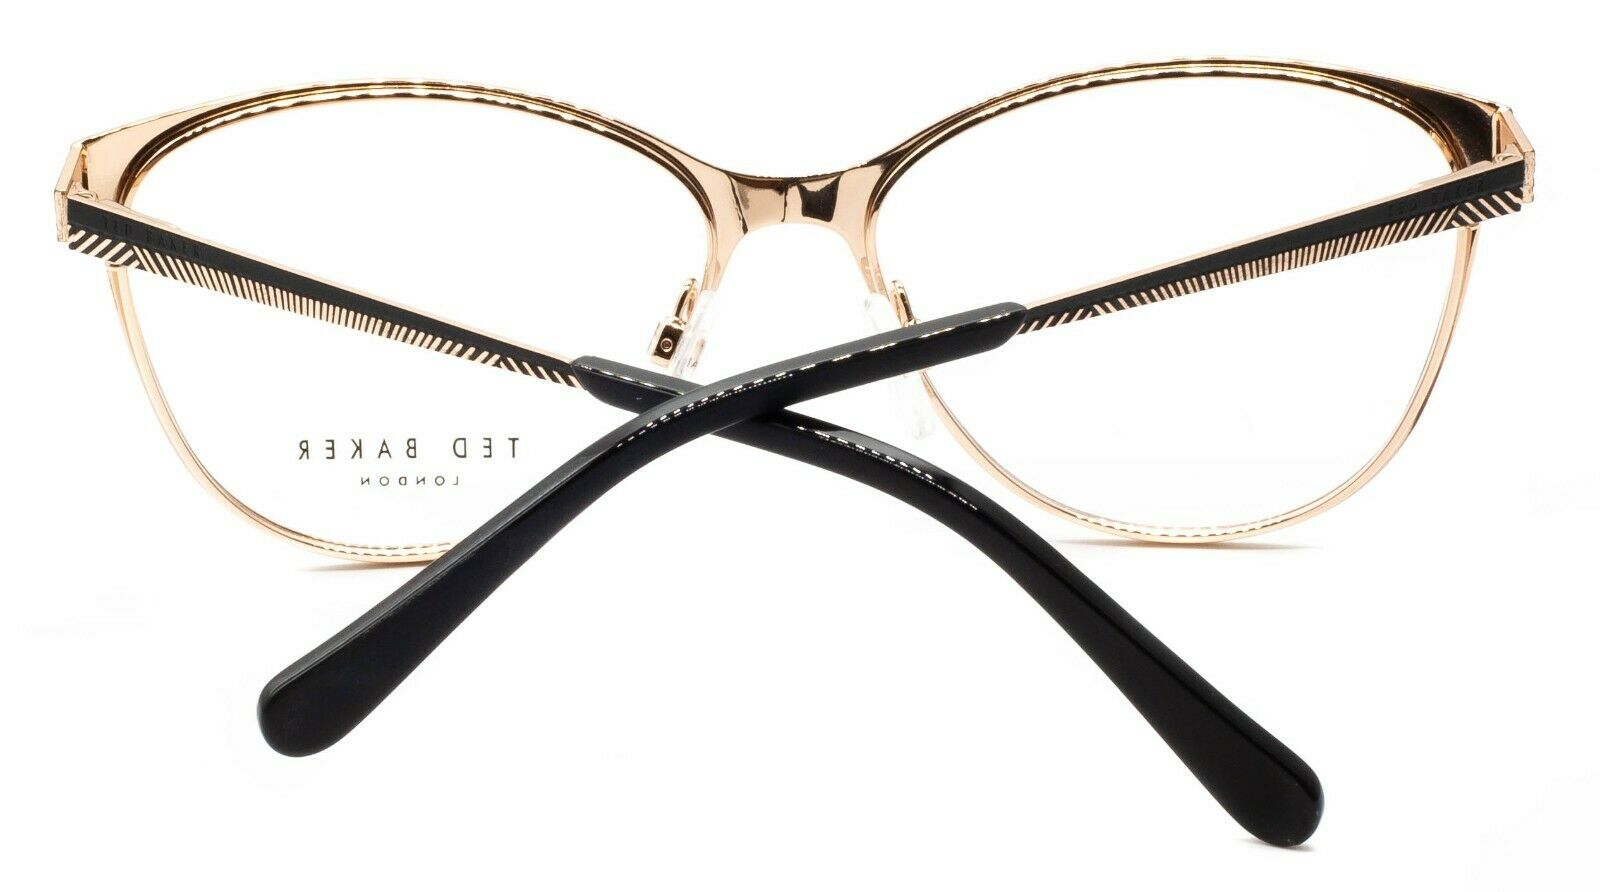 TED BAKER 2239 004 Hazel 56mm Eyewear FRAMES Glasses Eyeglasses RX Optical - New